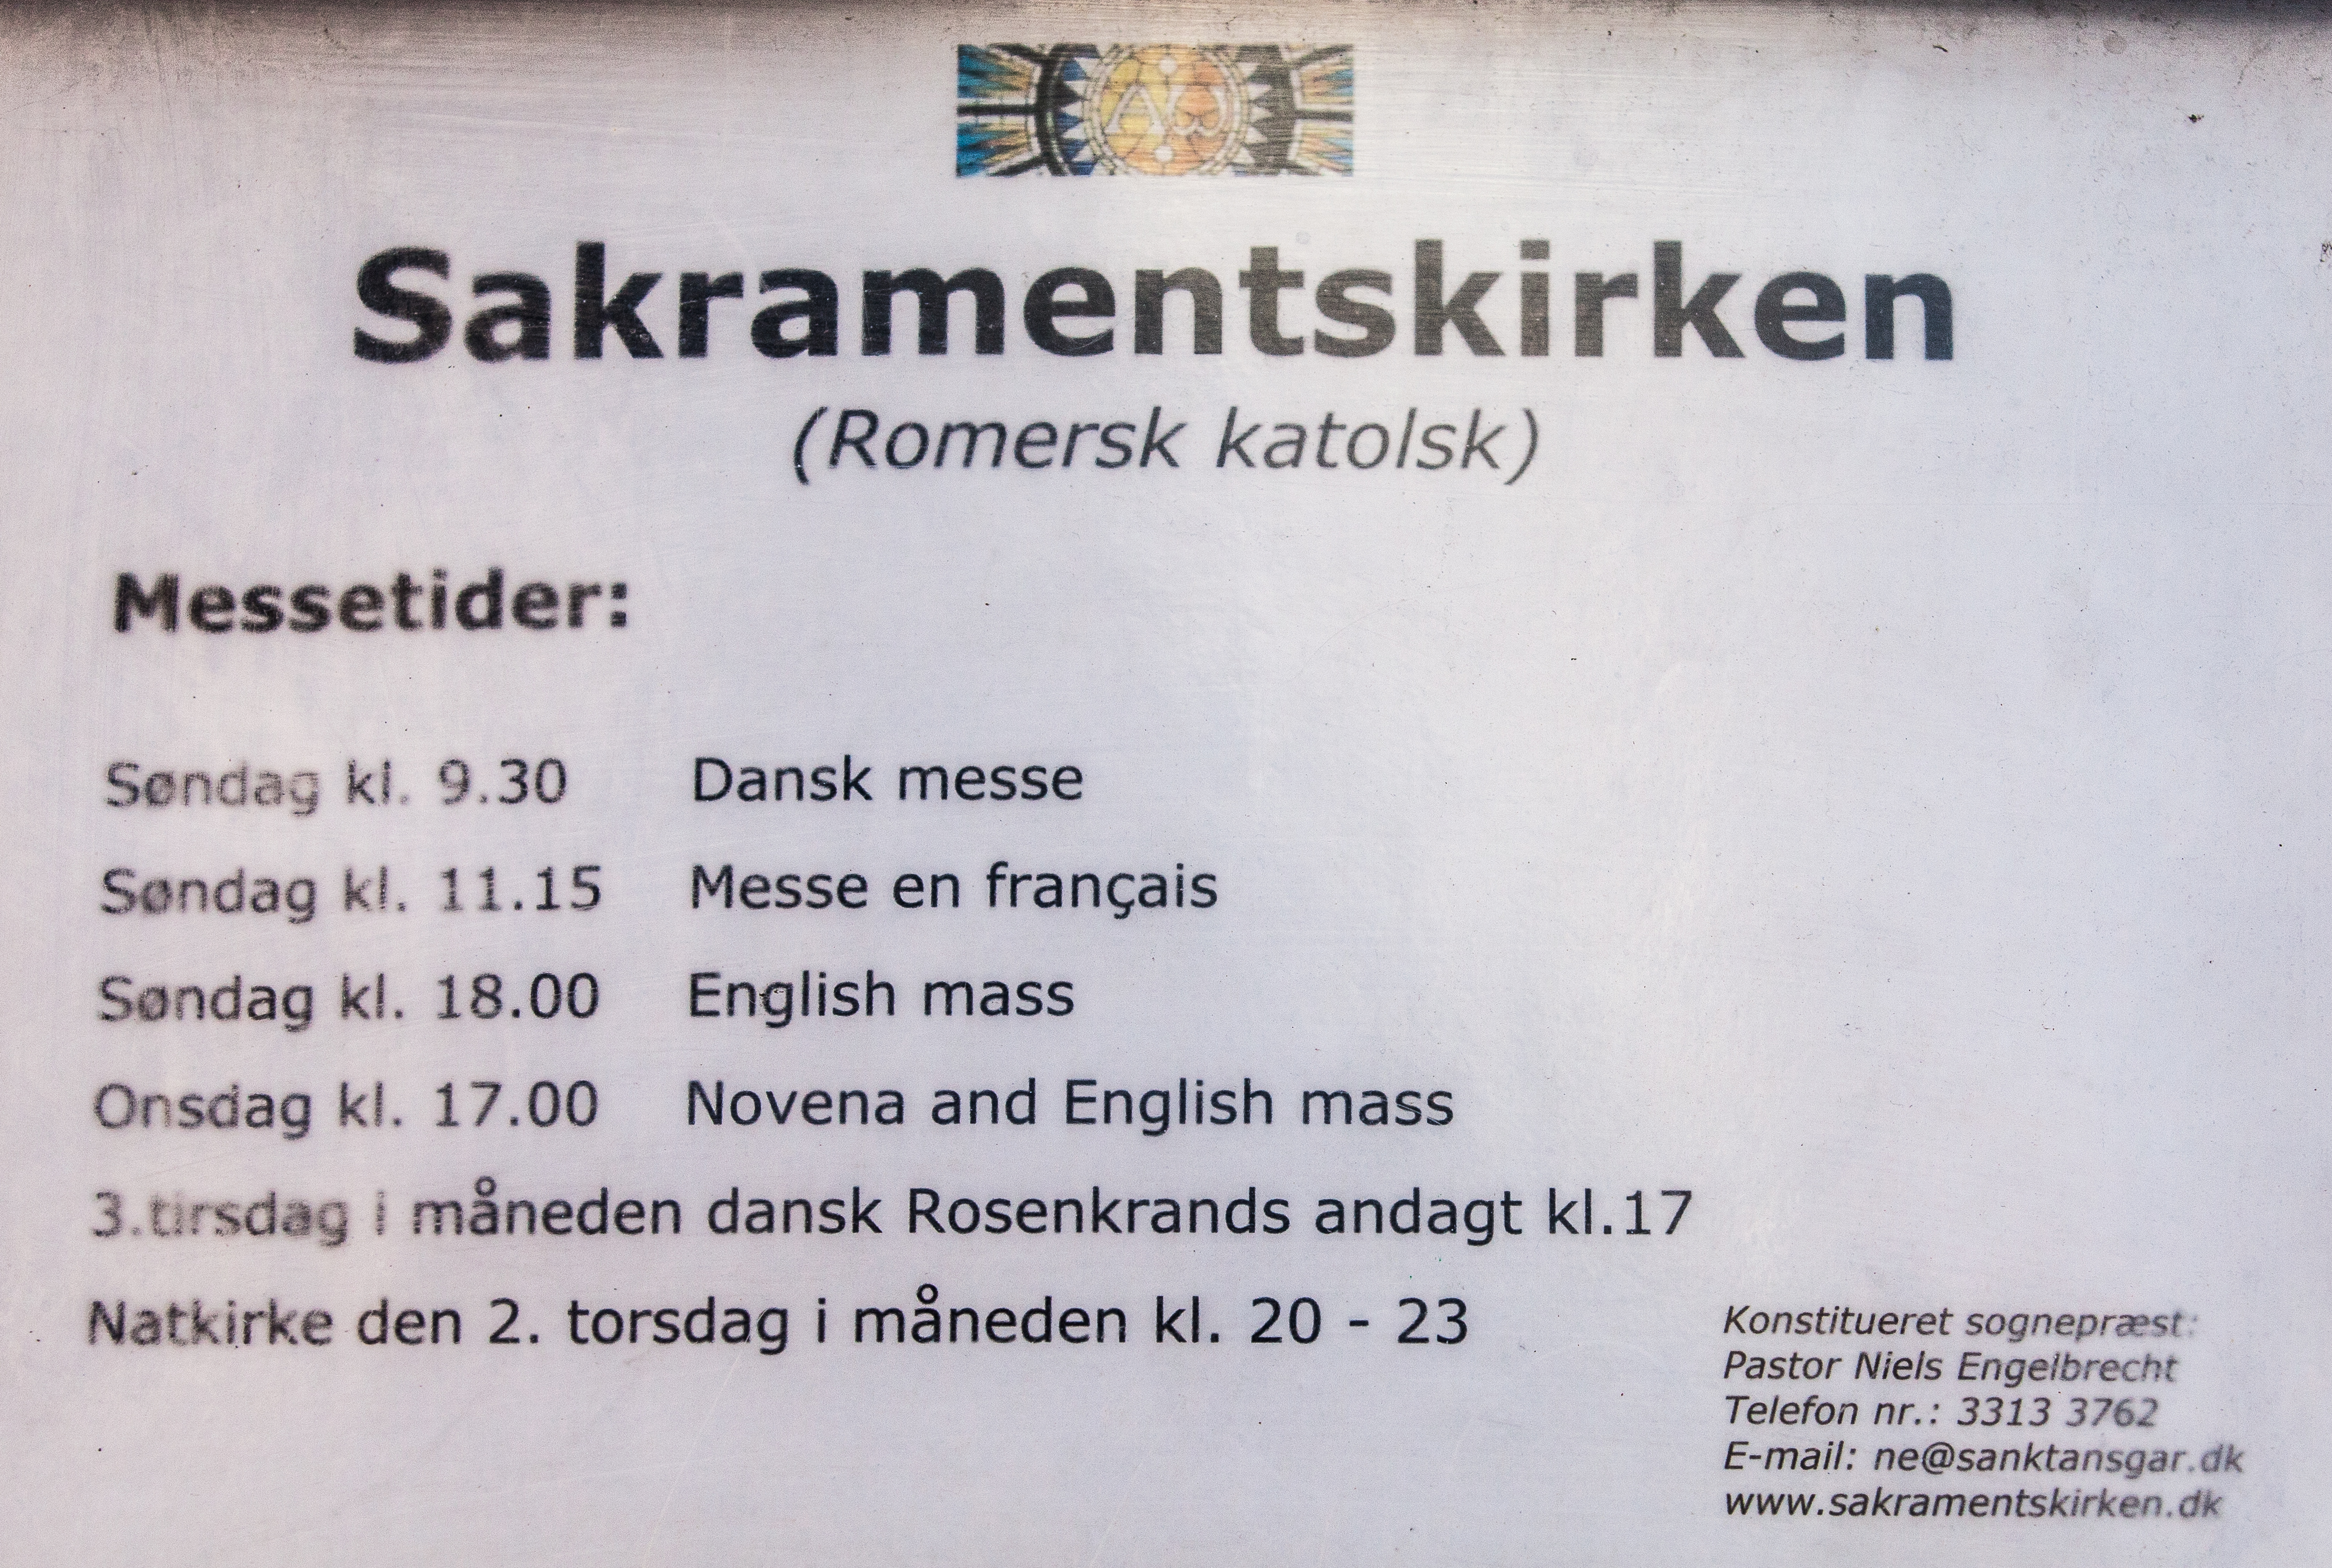 Sakramentskirken Holy Mass schedule (a Roman-Catholic church in Copenhagen), Denmark, June 2014, picture 55